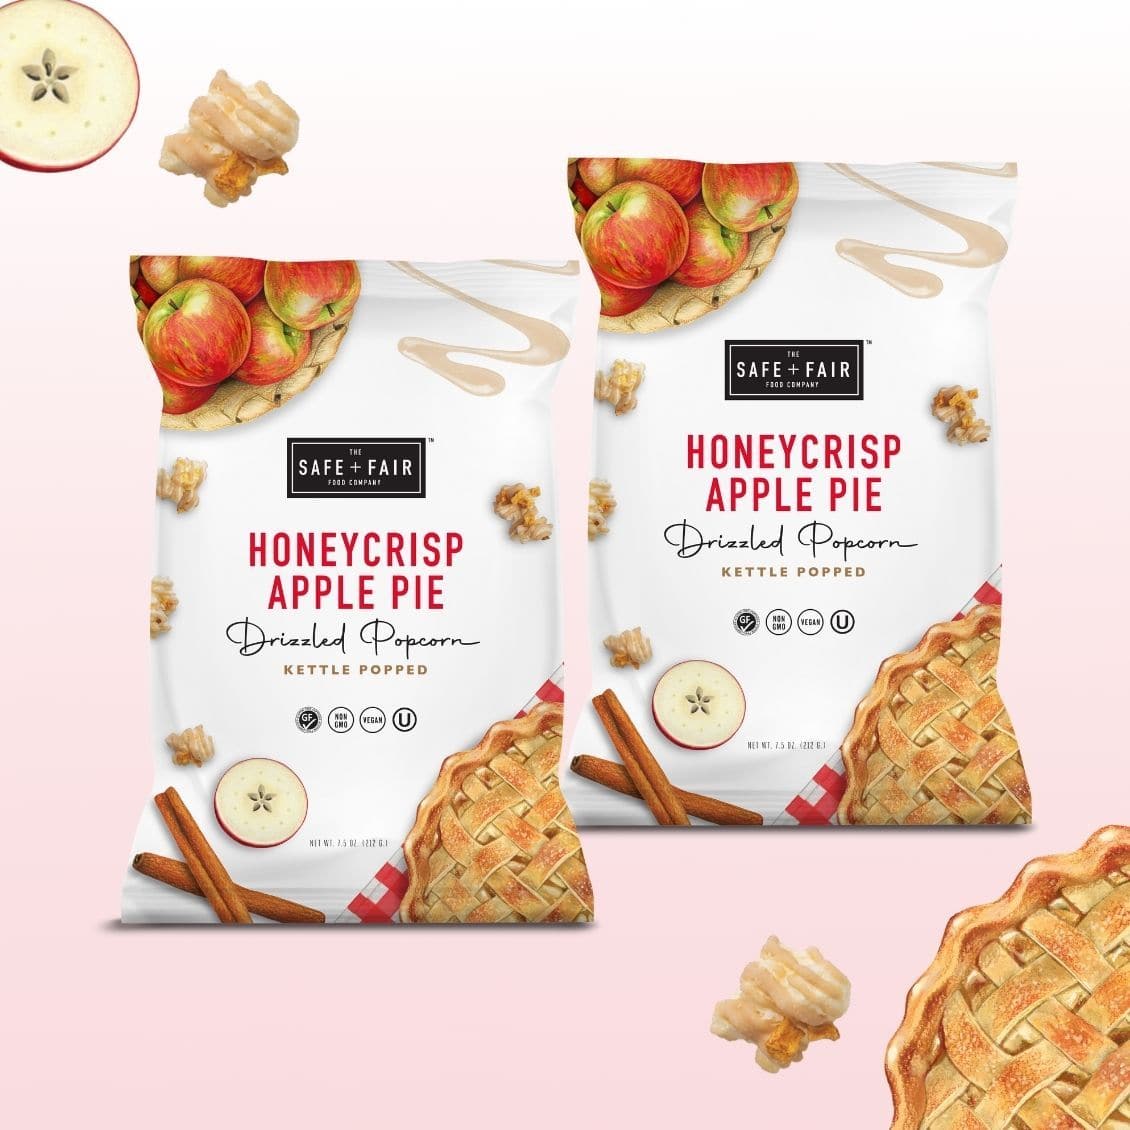 Apple Pie Popcorn – Maize Gourmet Popcorn & Ice Cream